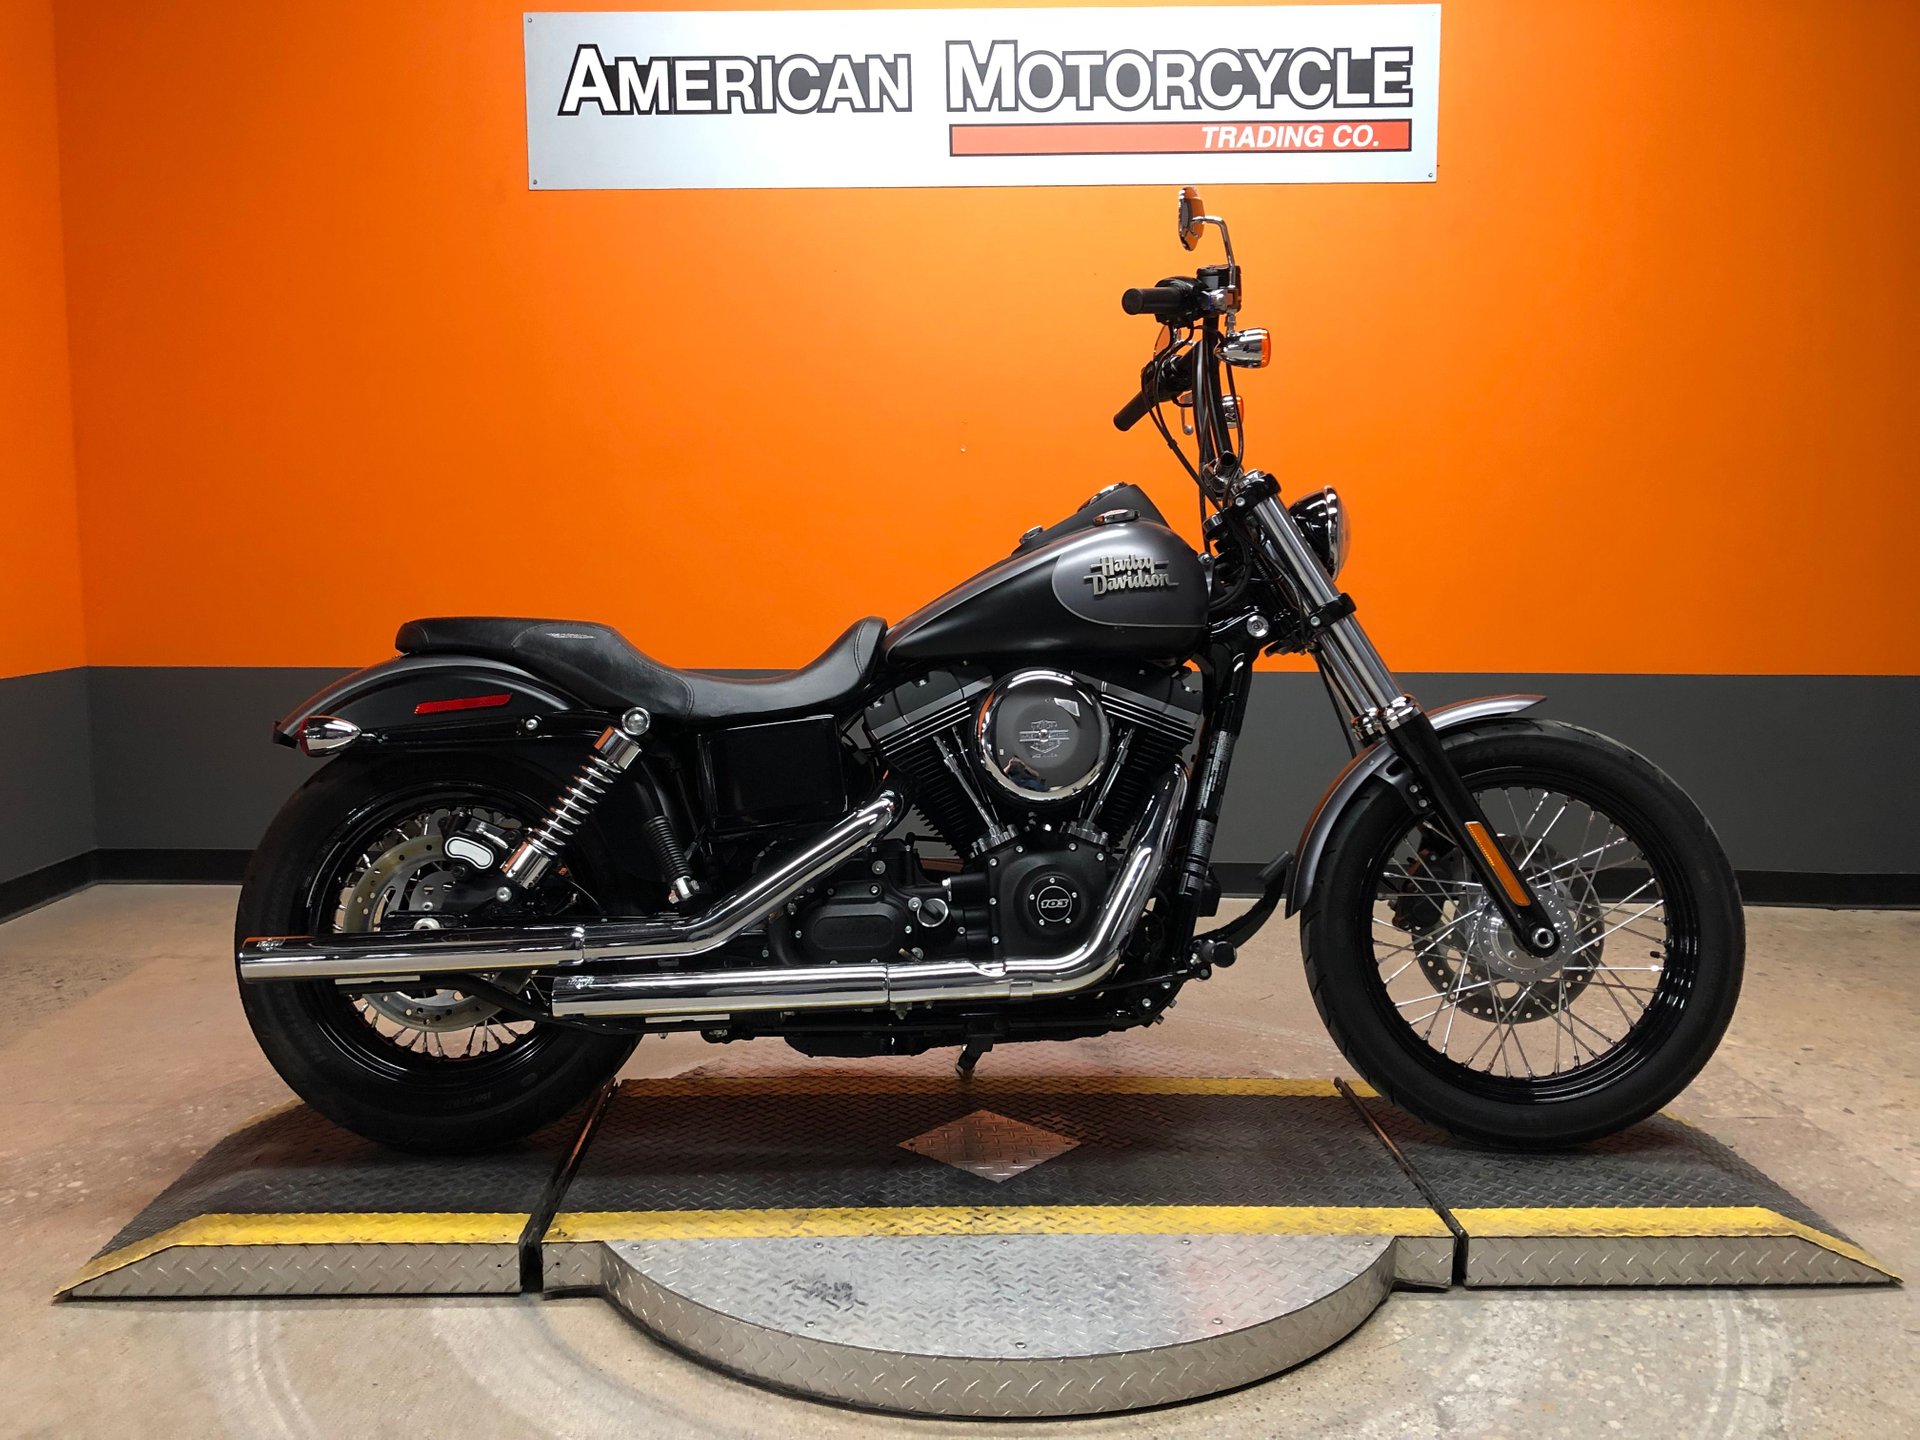 2017 Harley-Davidson Dyna Street Bob | American Motorcycle Trading Company  - Used Harley Davidson Motorcycles